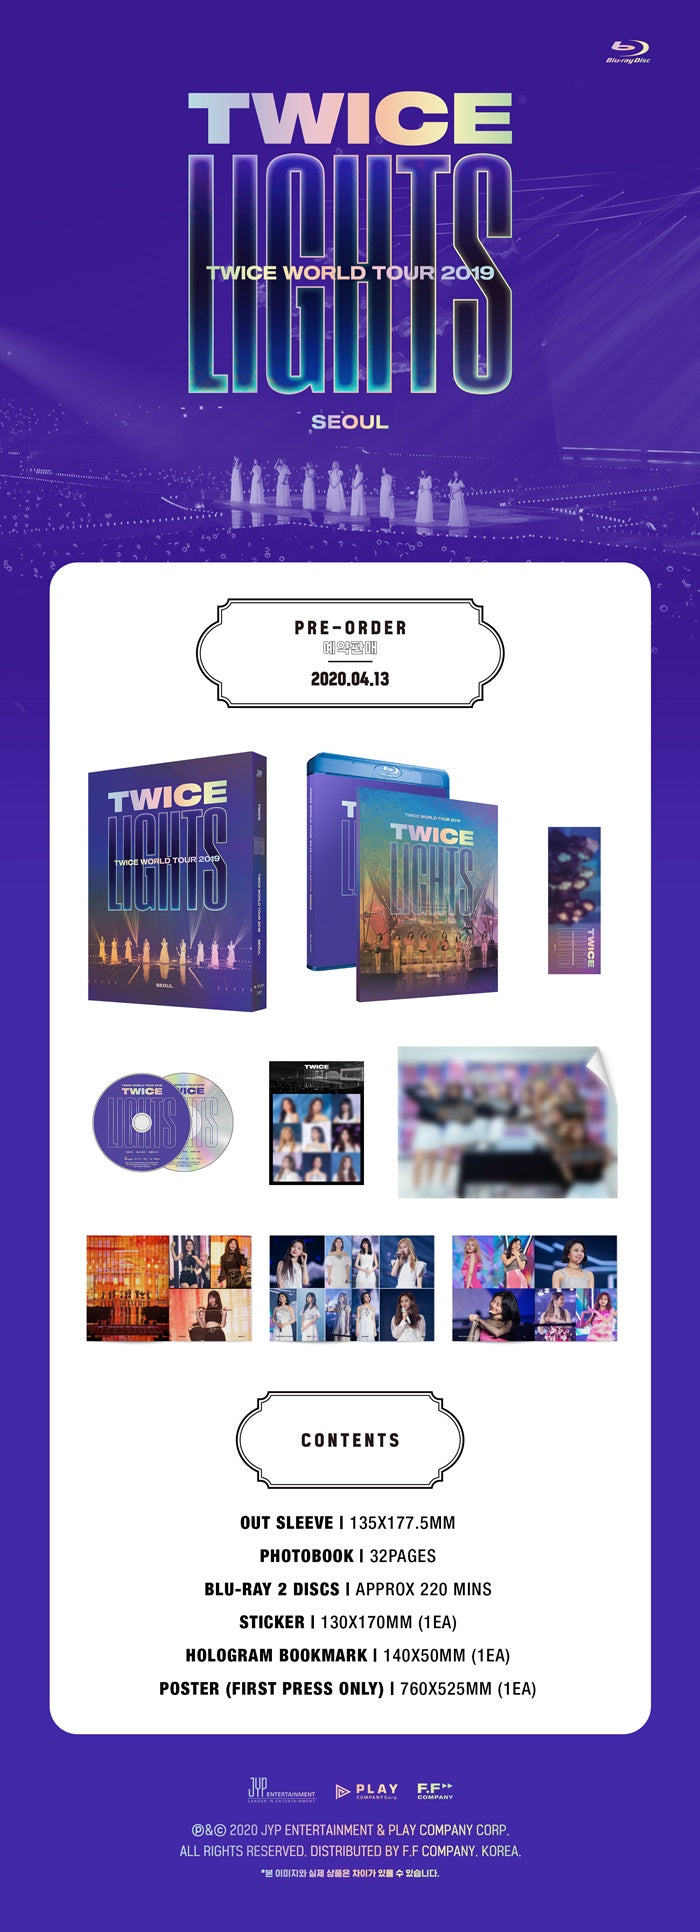 Twice - [Twicelights] (2019 World Tour In Seoul Blu-Ray (2 DISC))